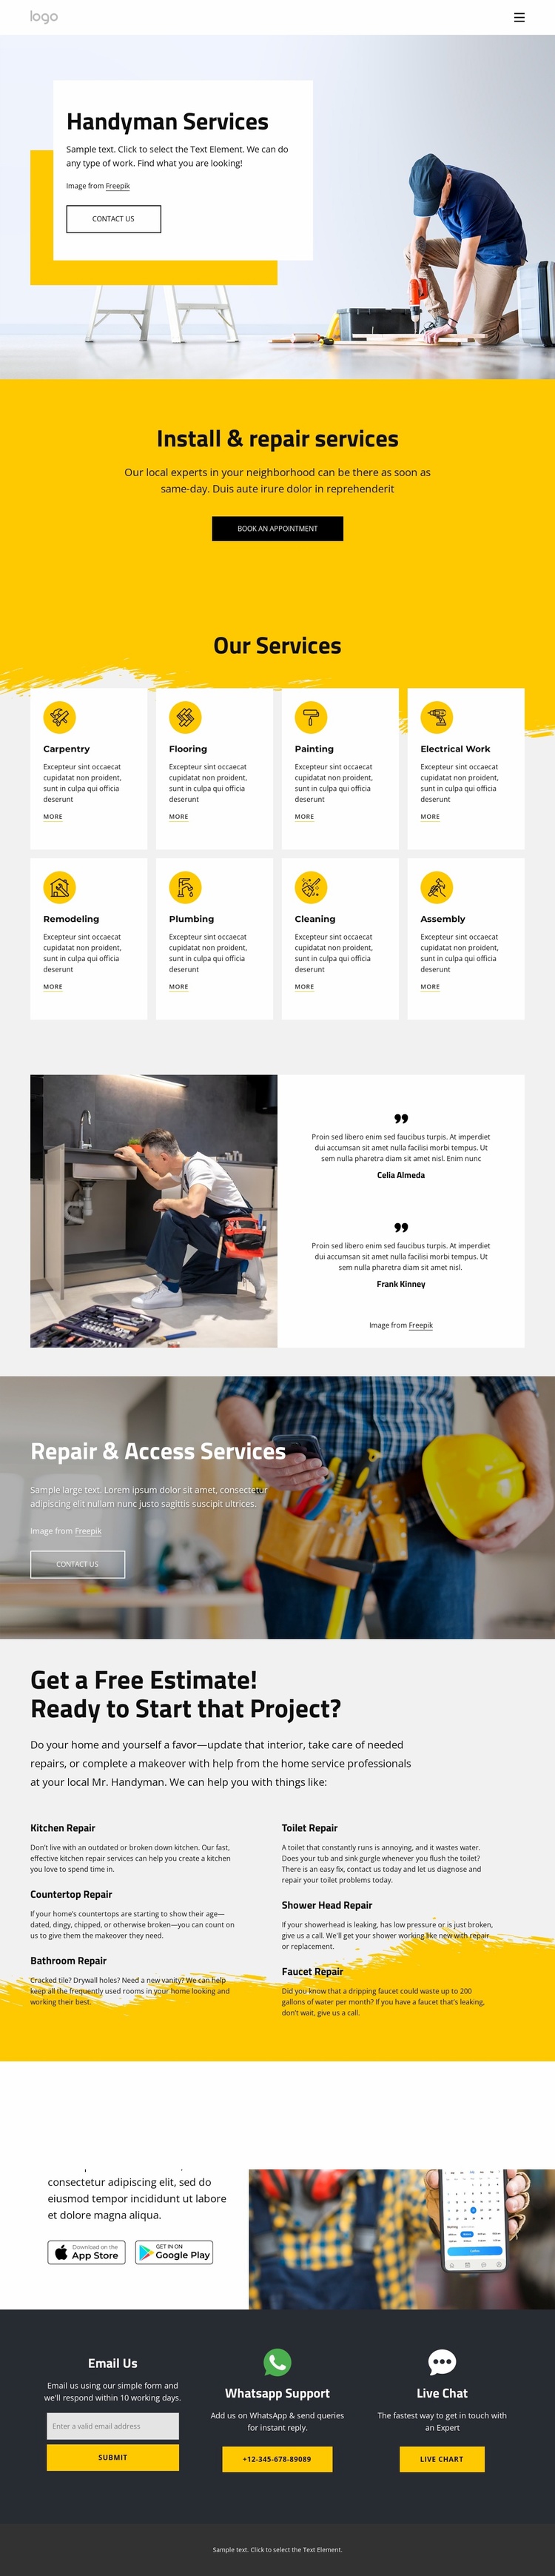 Handyman services Landing Page